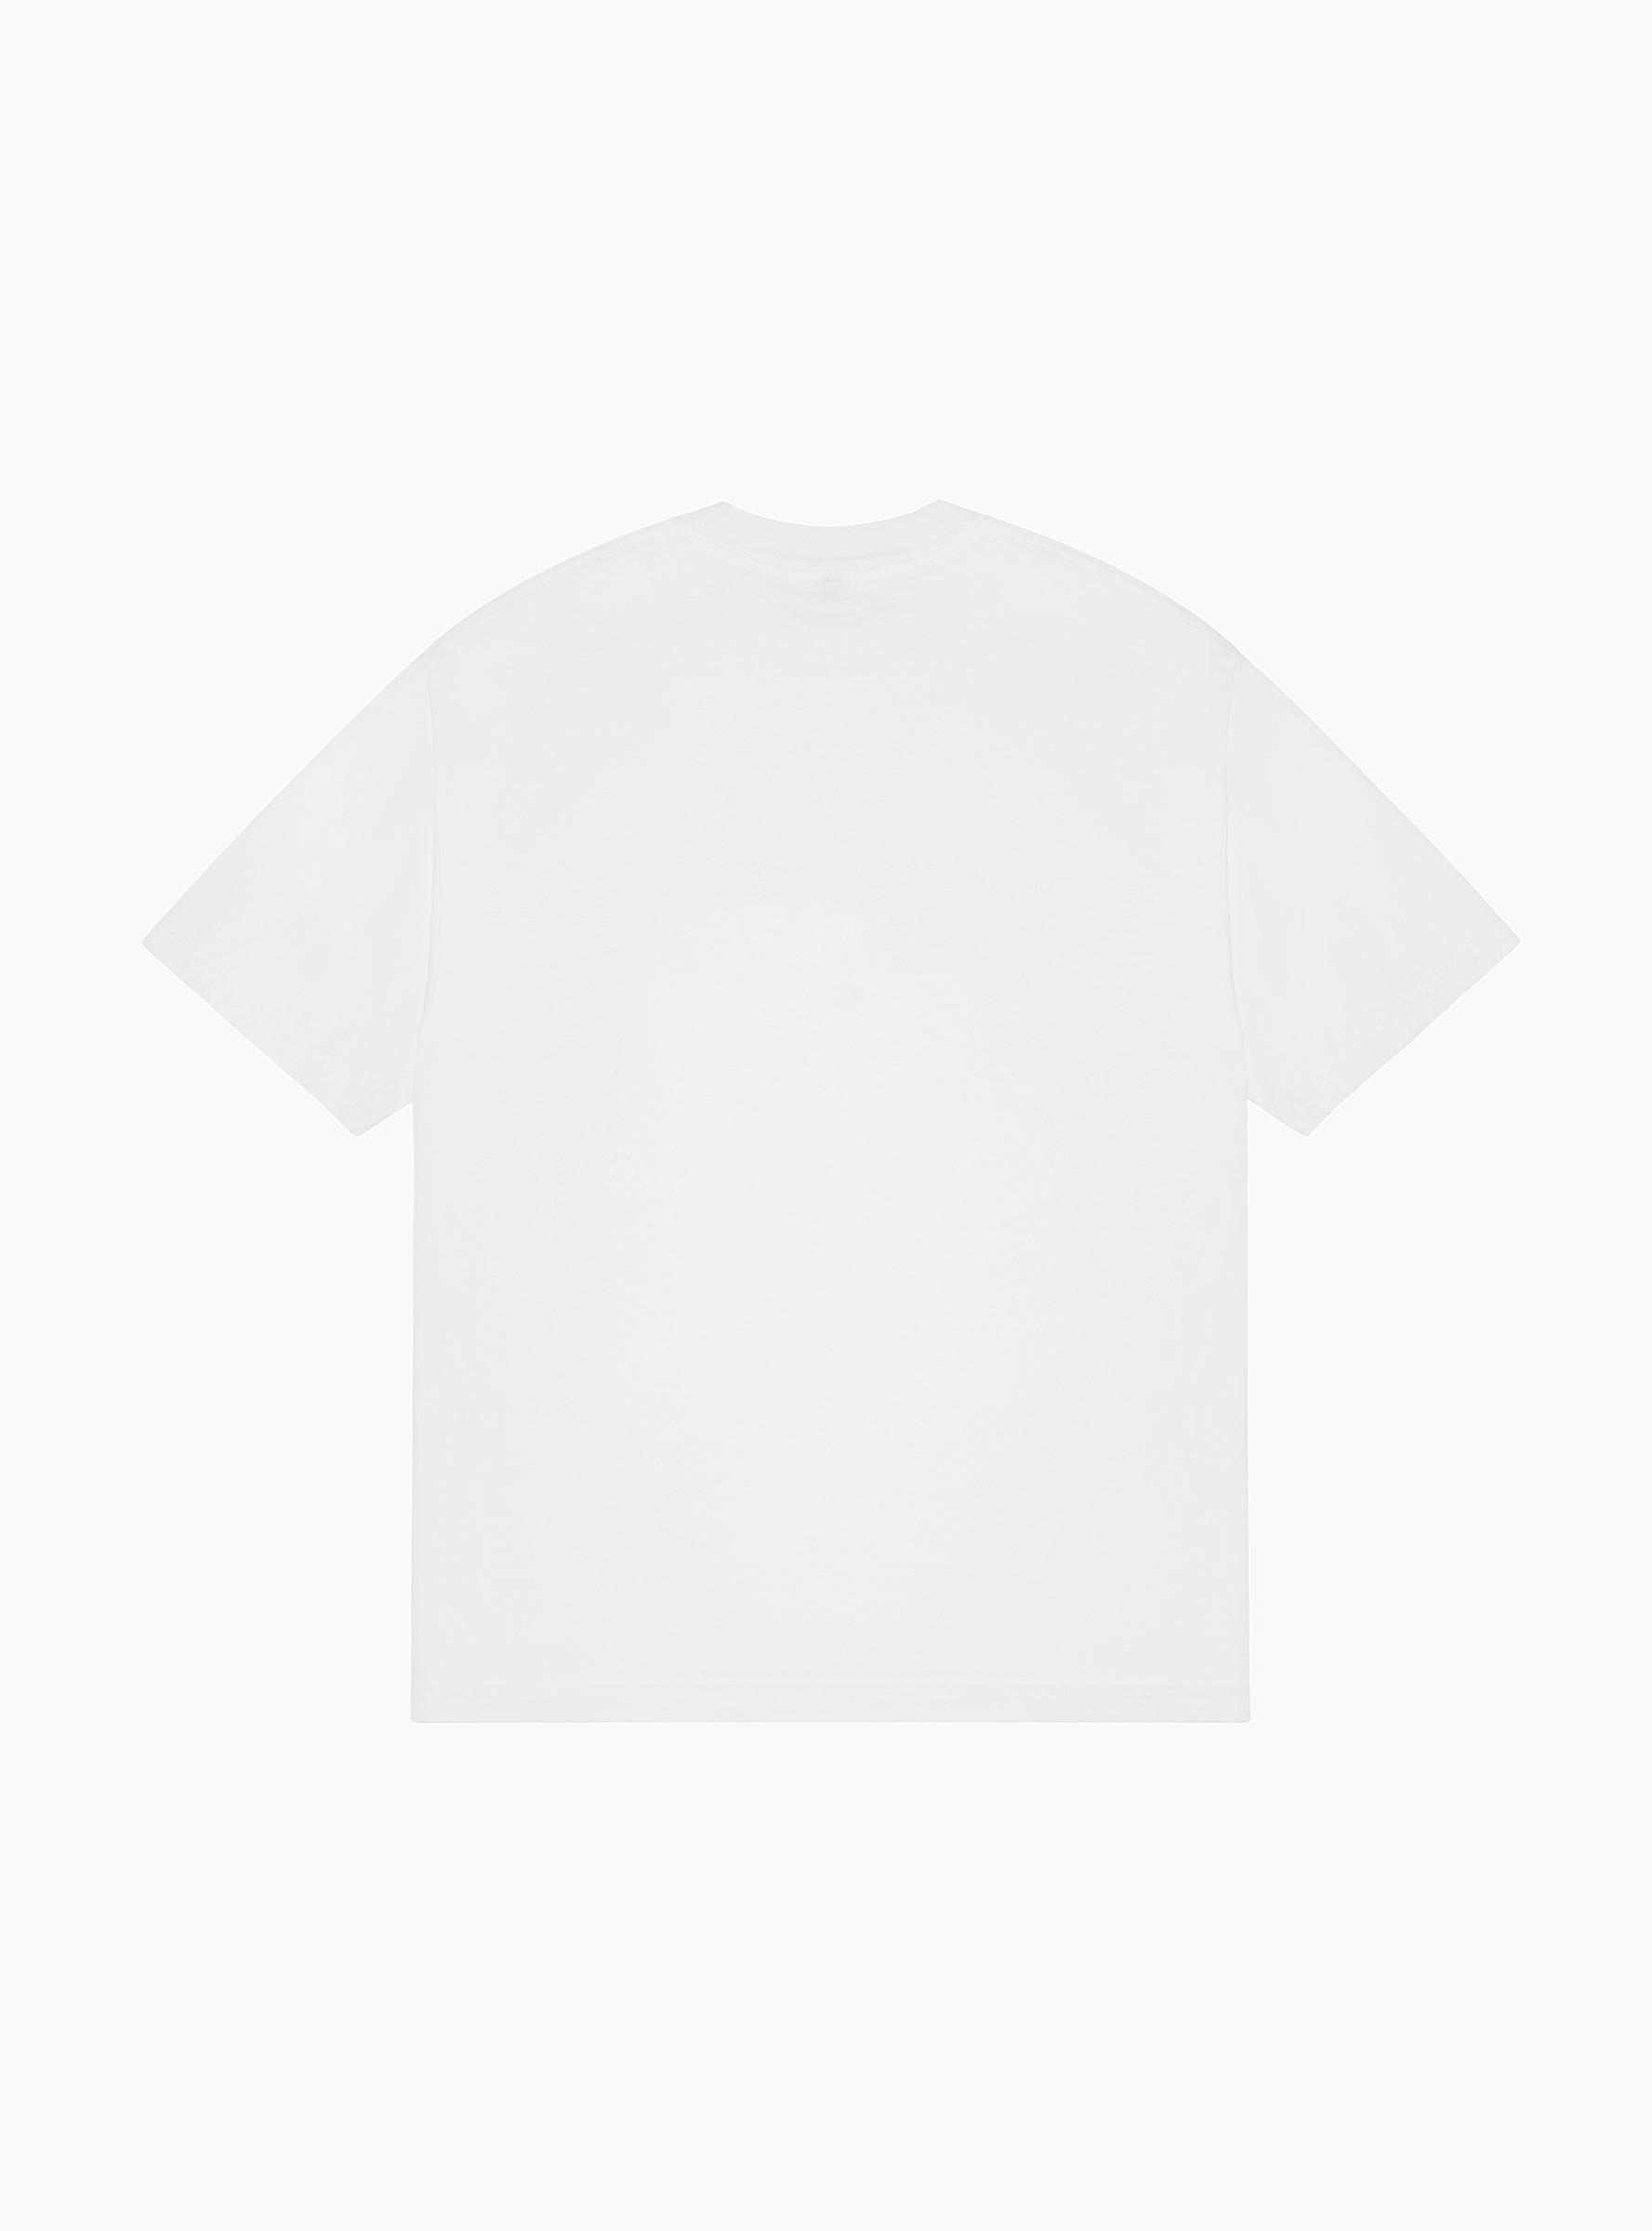  b. Eautiful IZM T-shirt White - Size: XL